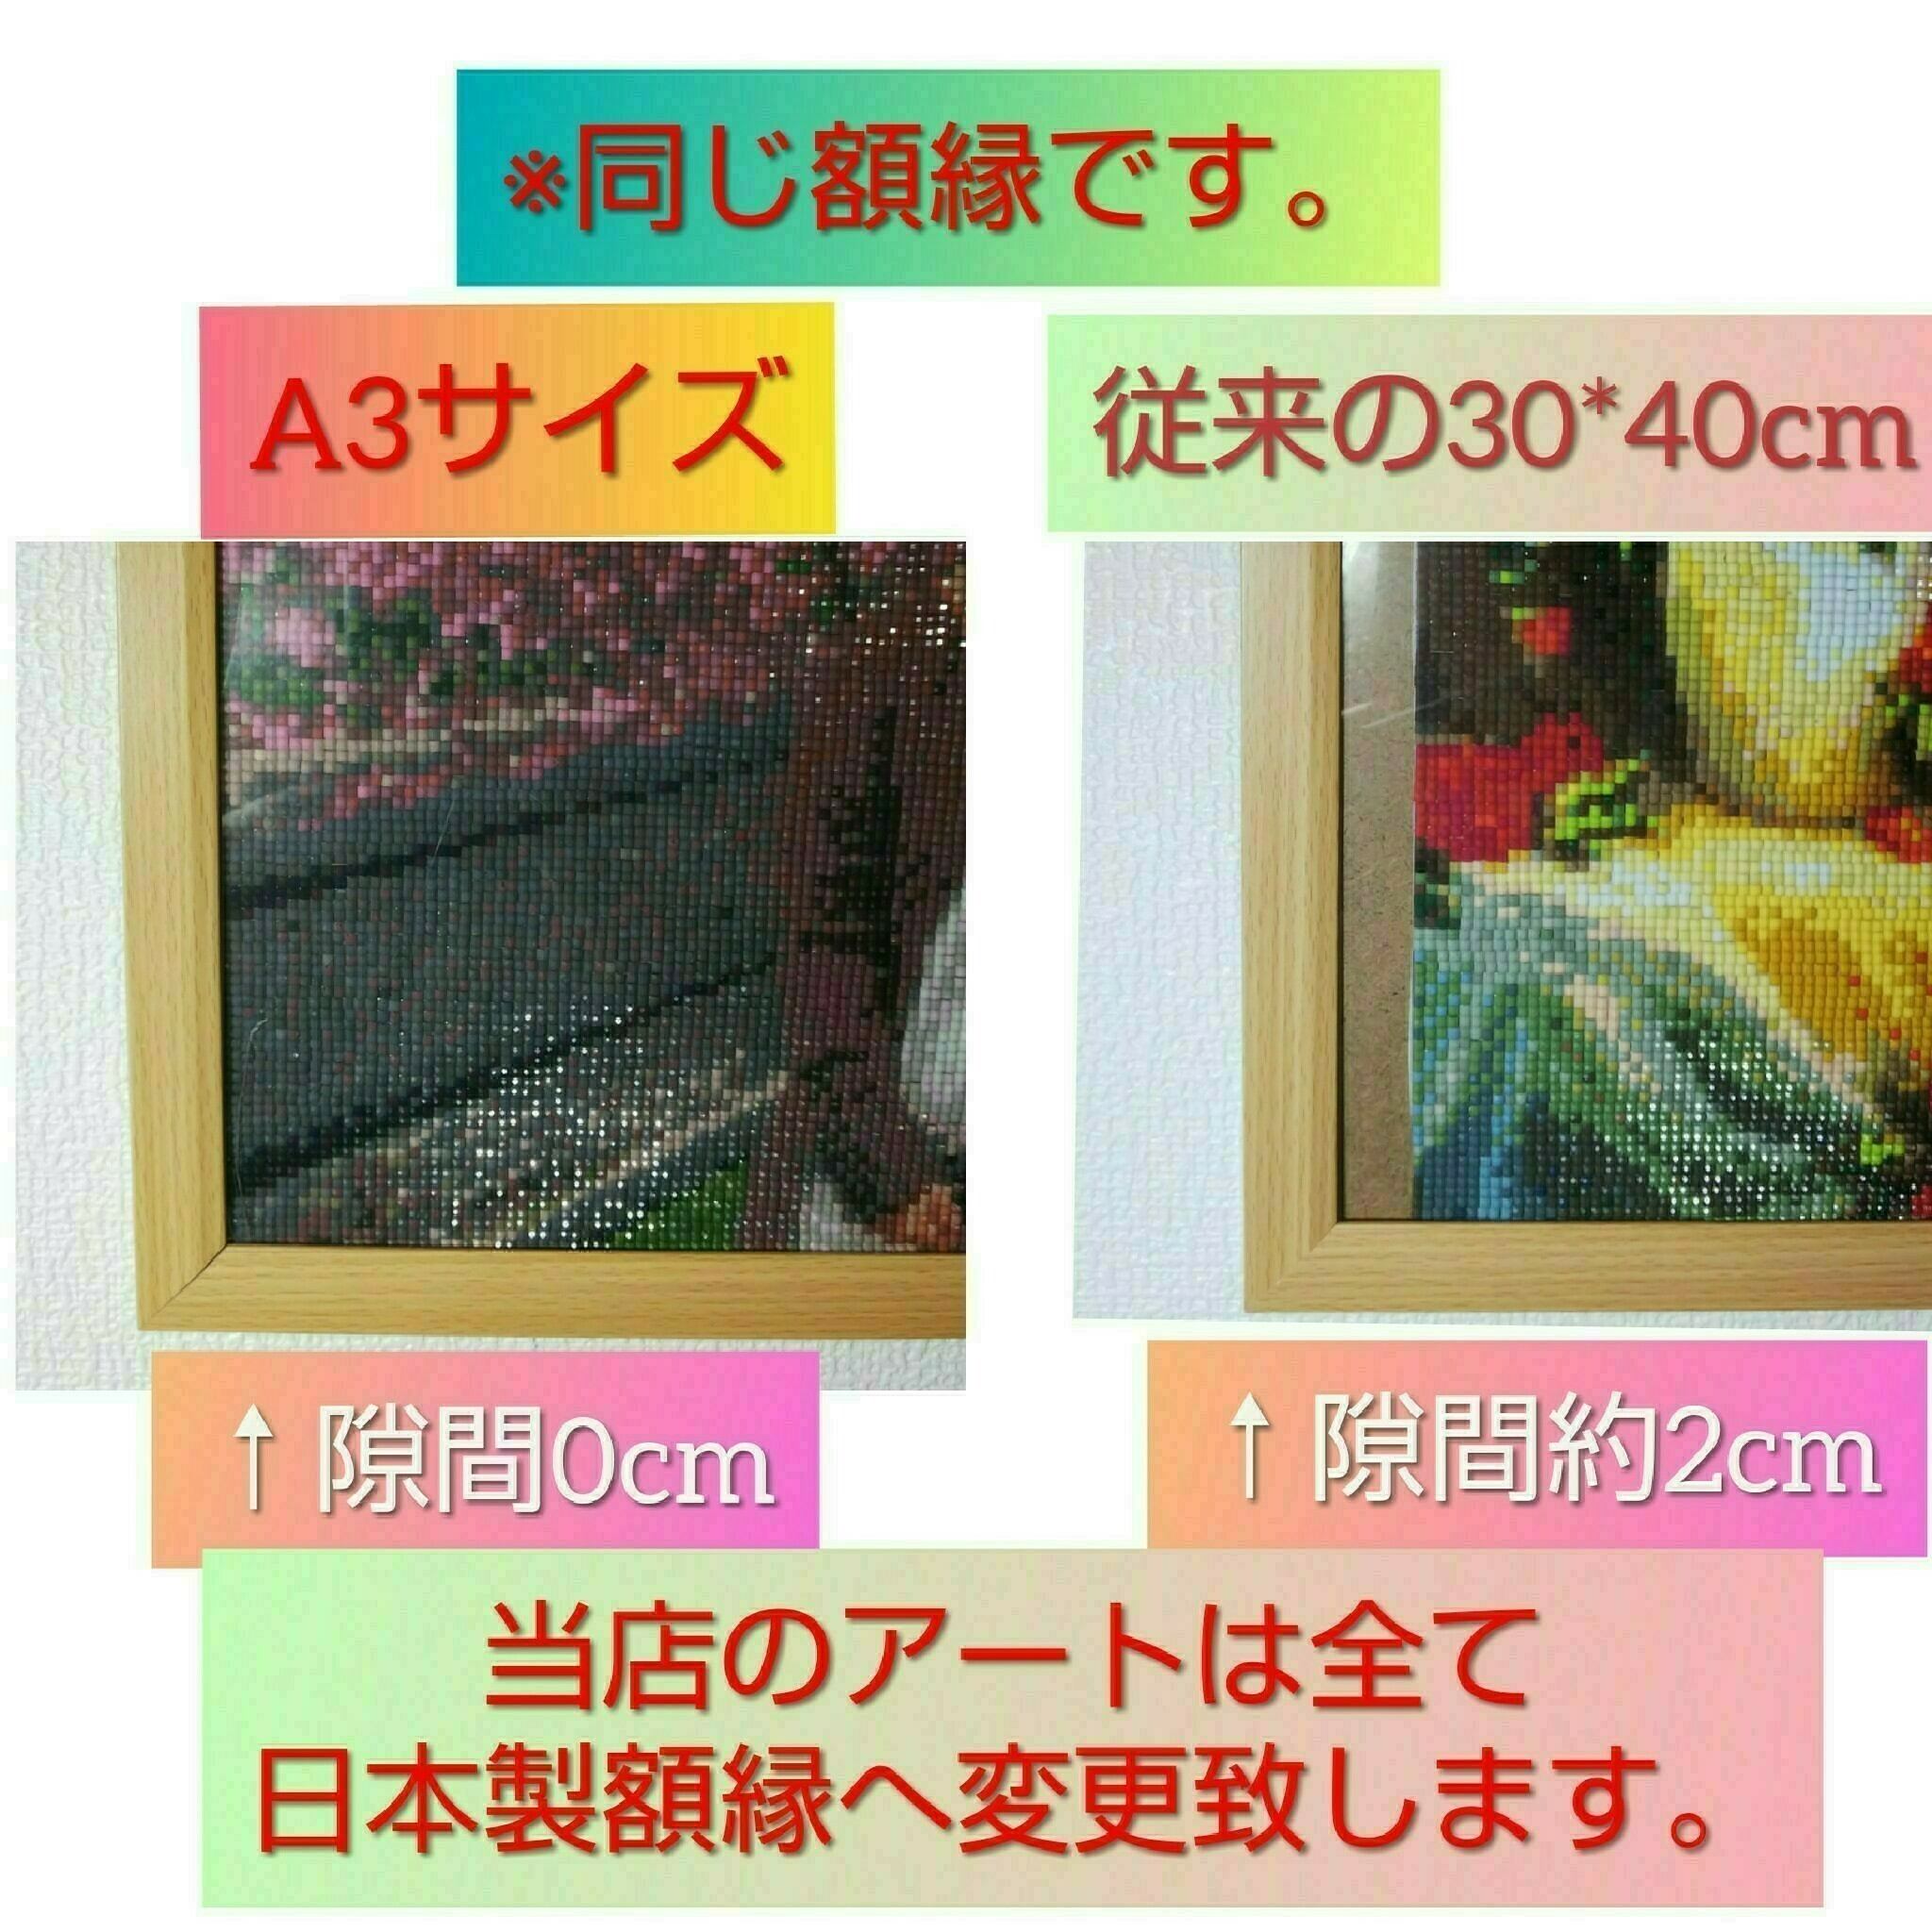 A3サイズ 四角ビーズ【runa-533】ダイヤモンドアート